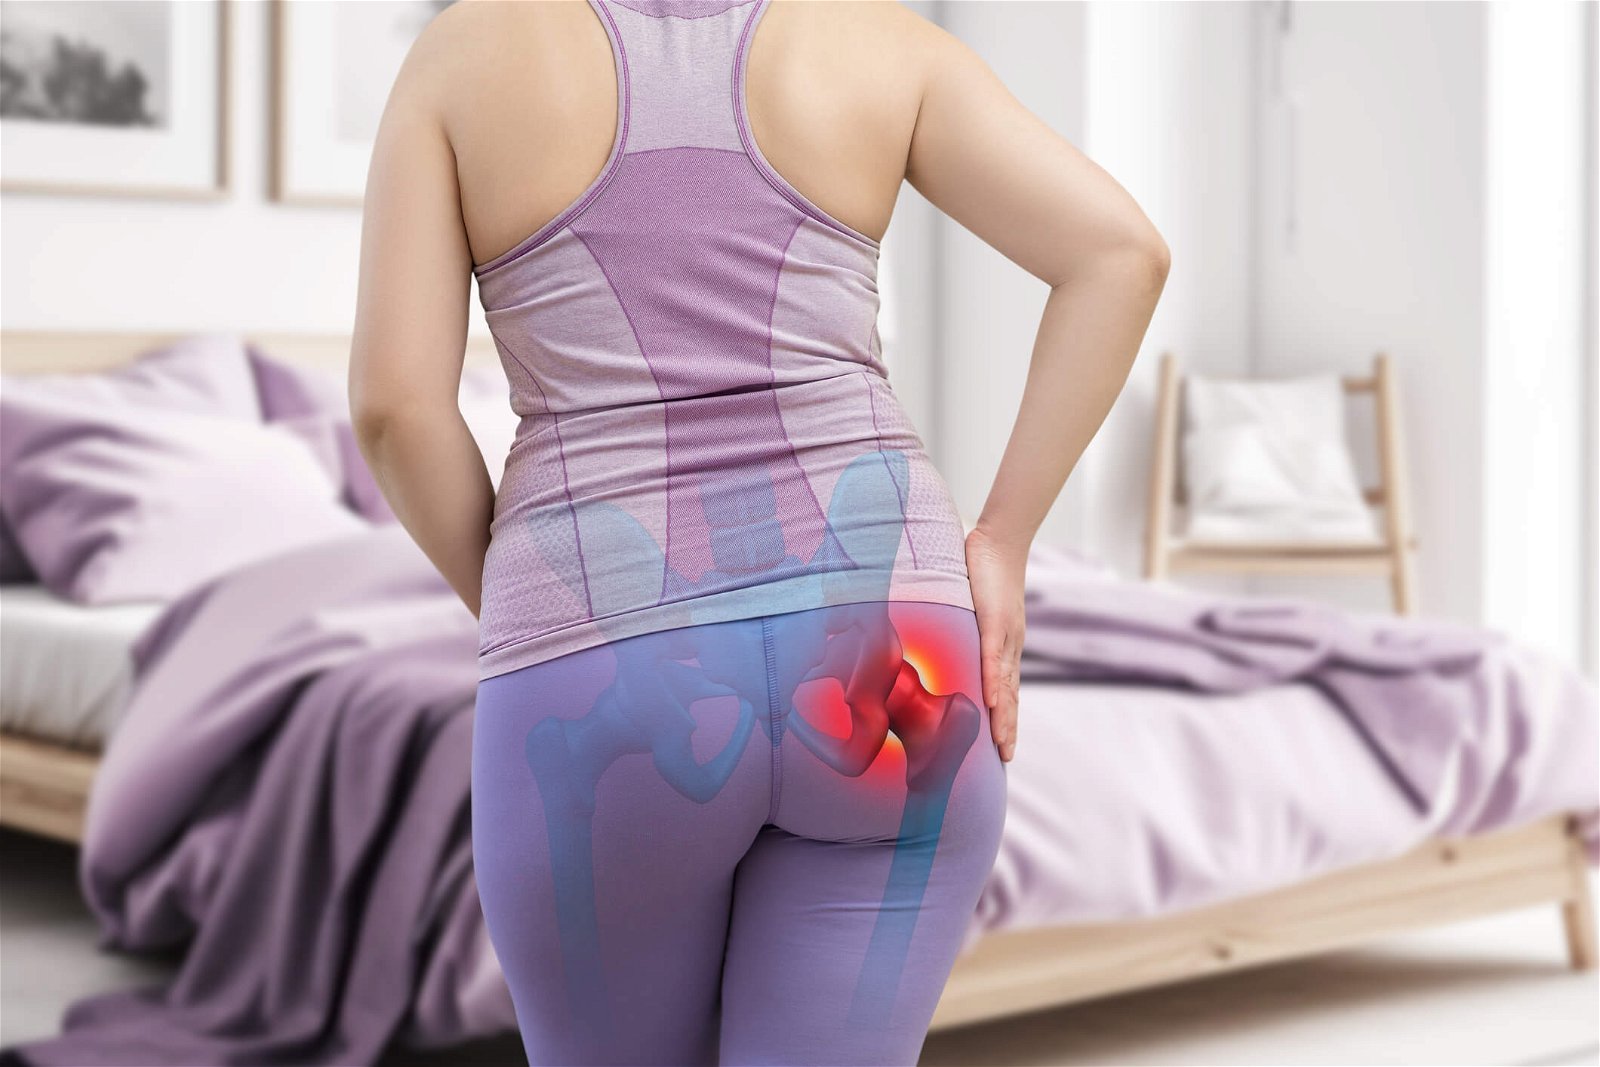 GTPS - Greater trochanteric pain syndrome / trochanteric bursitis - Hip pain when lying on your side